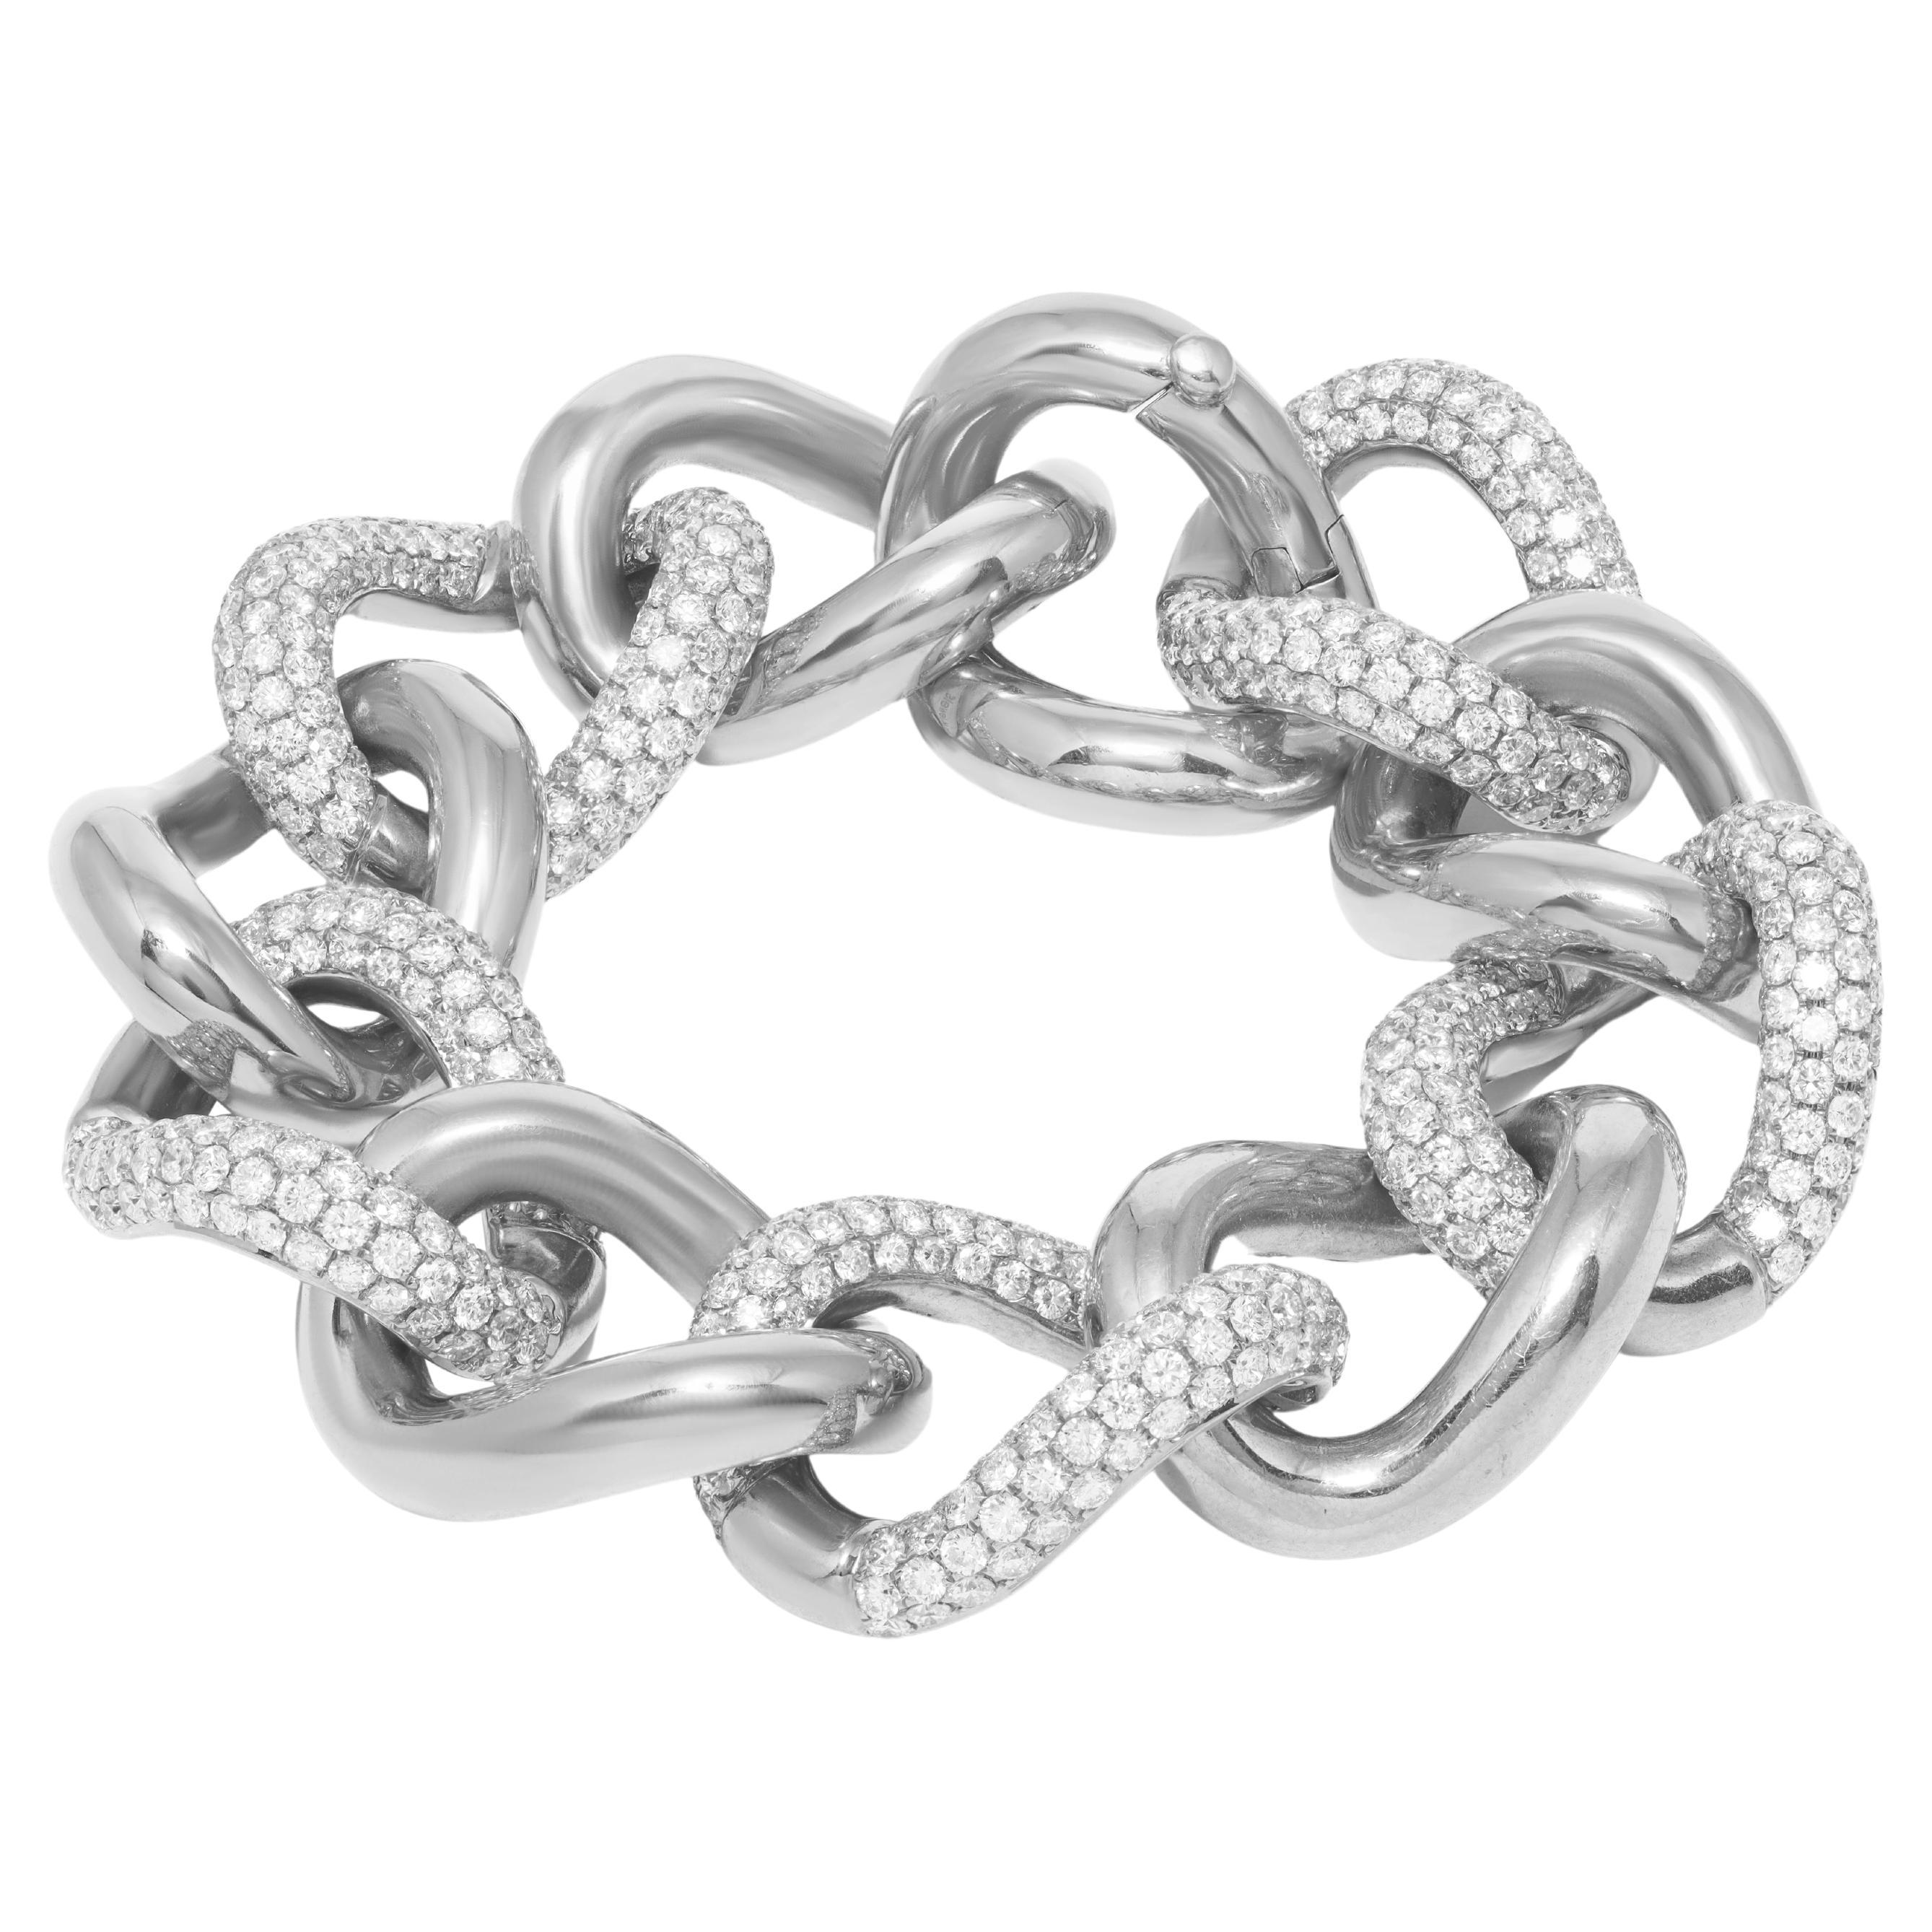 Diana M. 18kt white gold diamond linked bracelet containing 21.85 cts of diamond